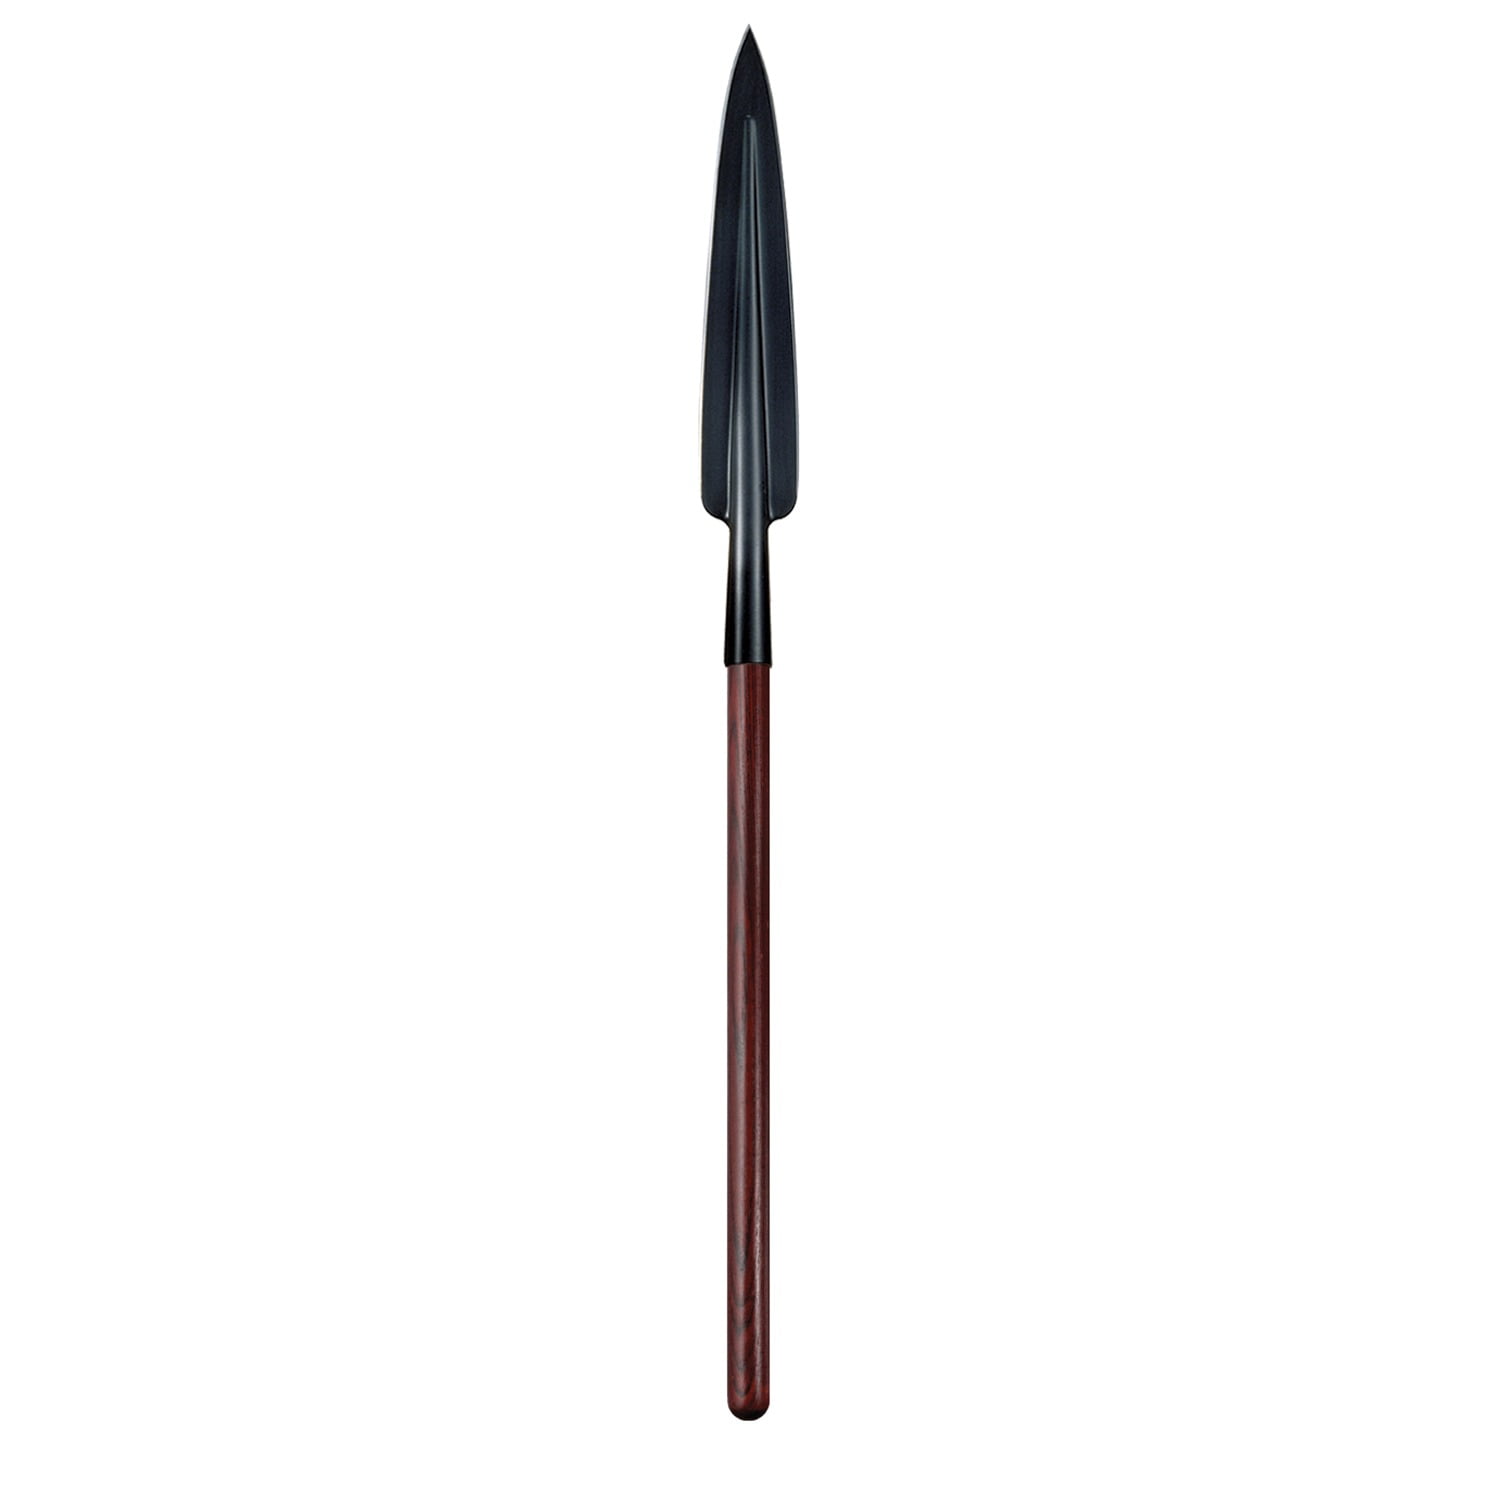 Bestselling Assegai Long Shaft Spear with Secure-Ex Sheath 